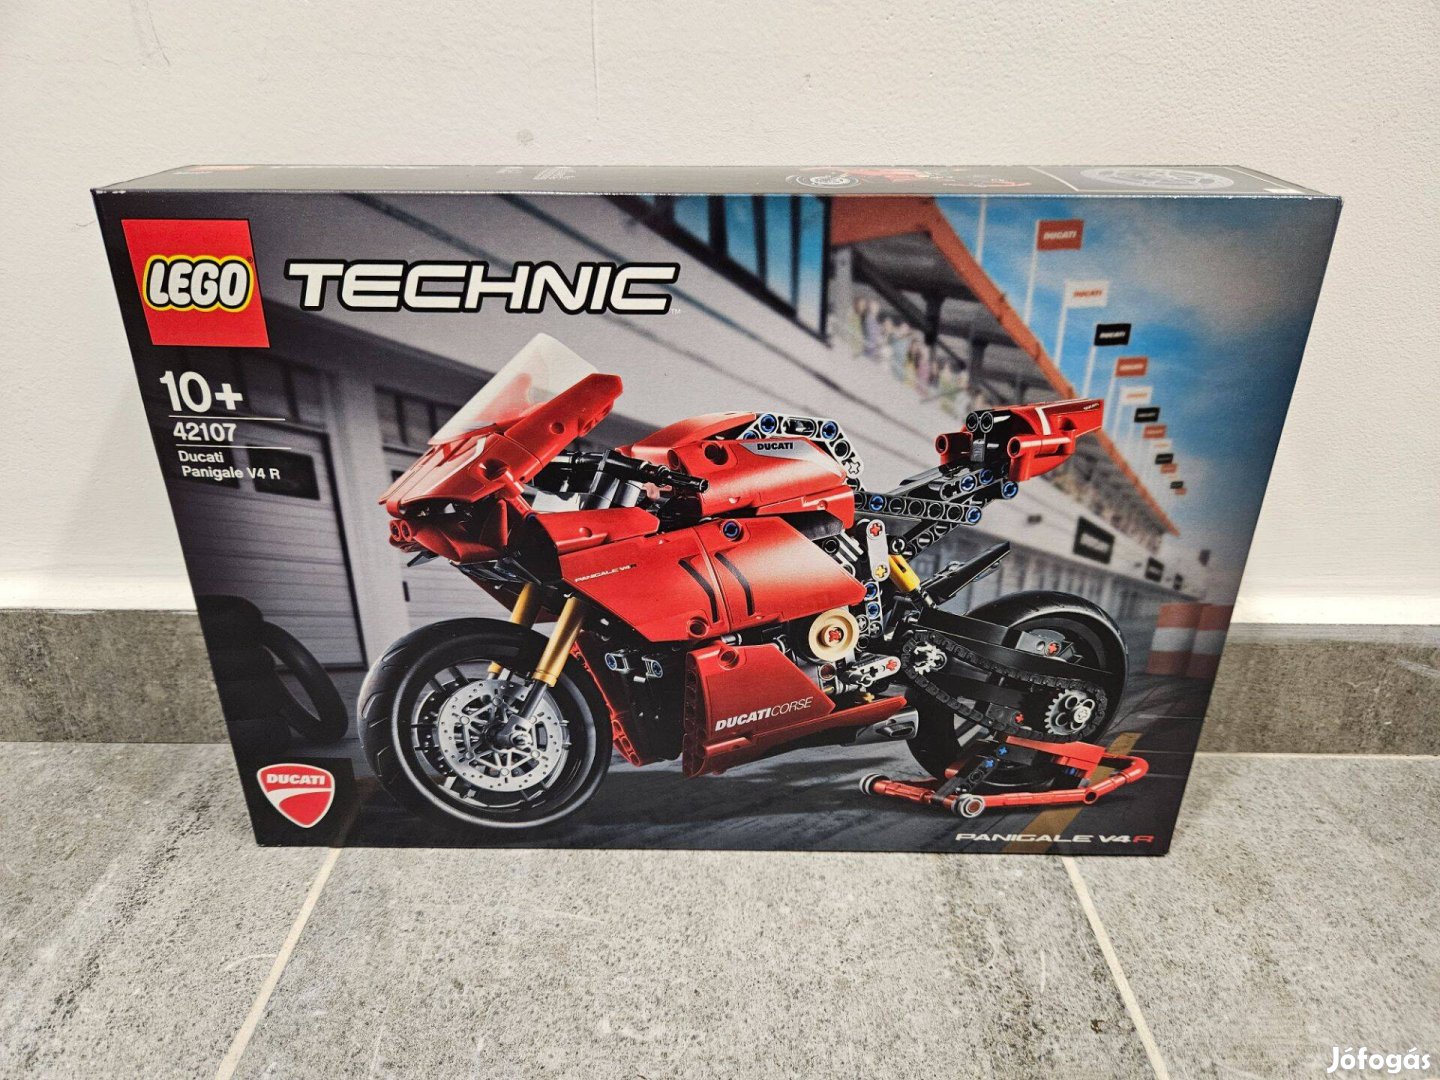 LEGO Technic - Ducati Panigale V4 R 42107 bontatlan, új